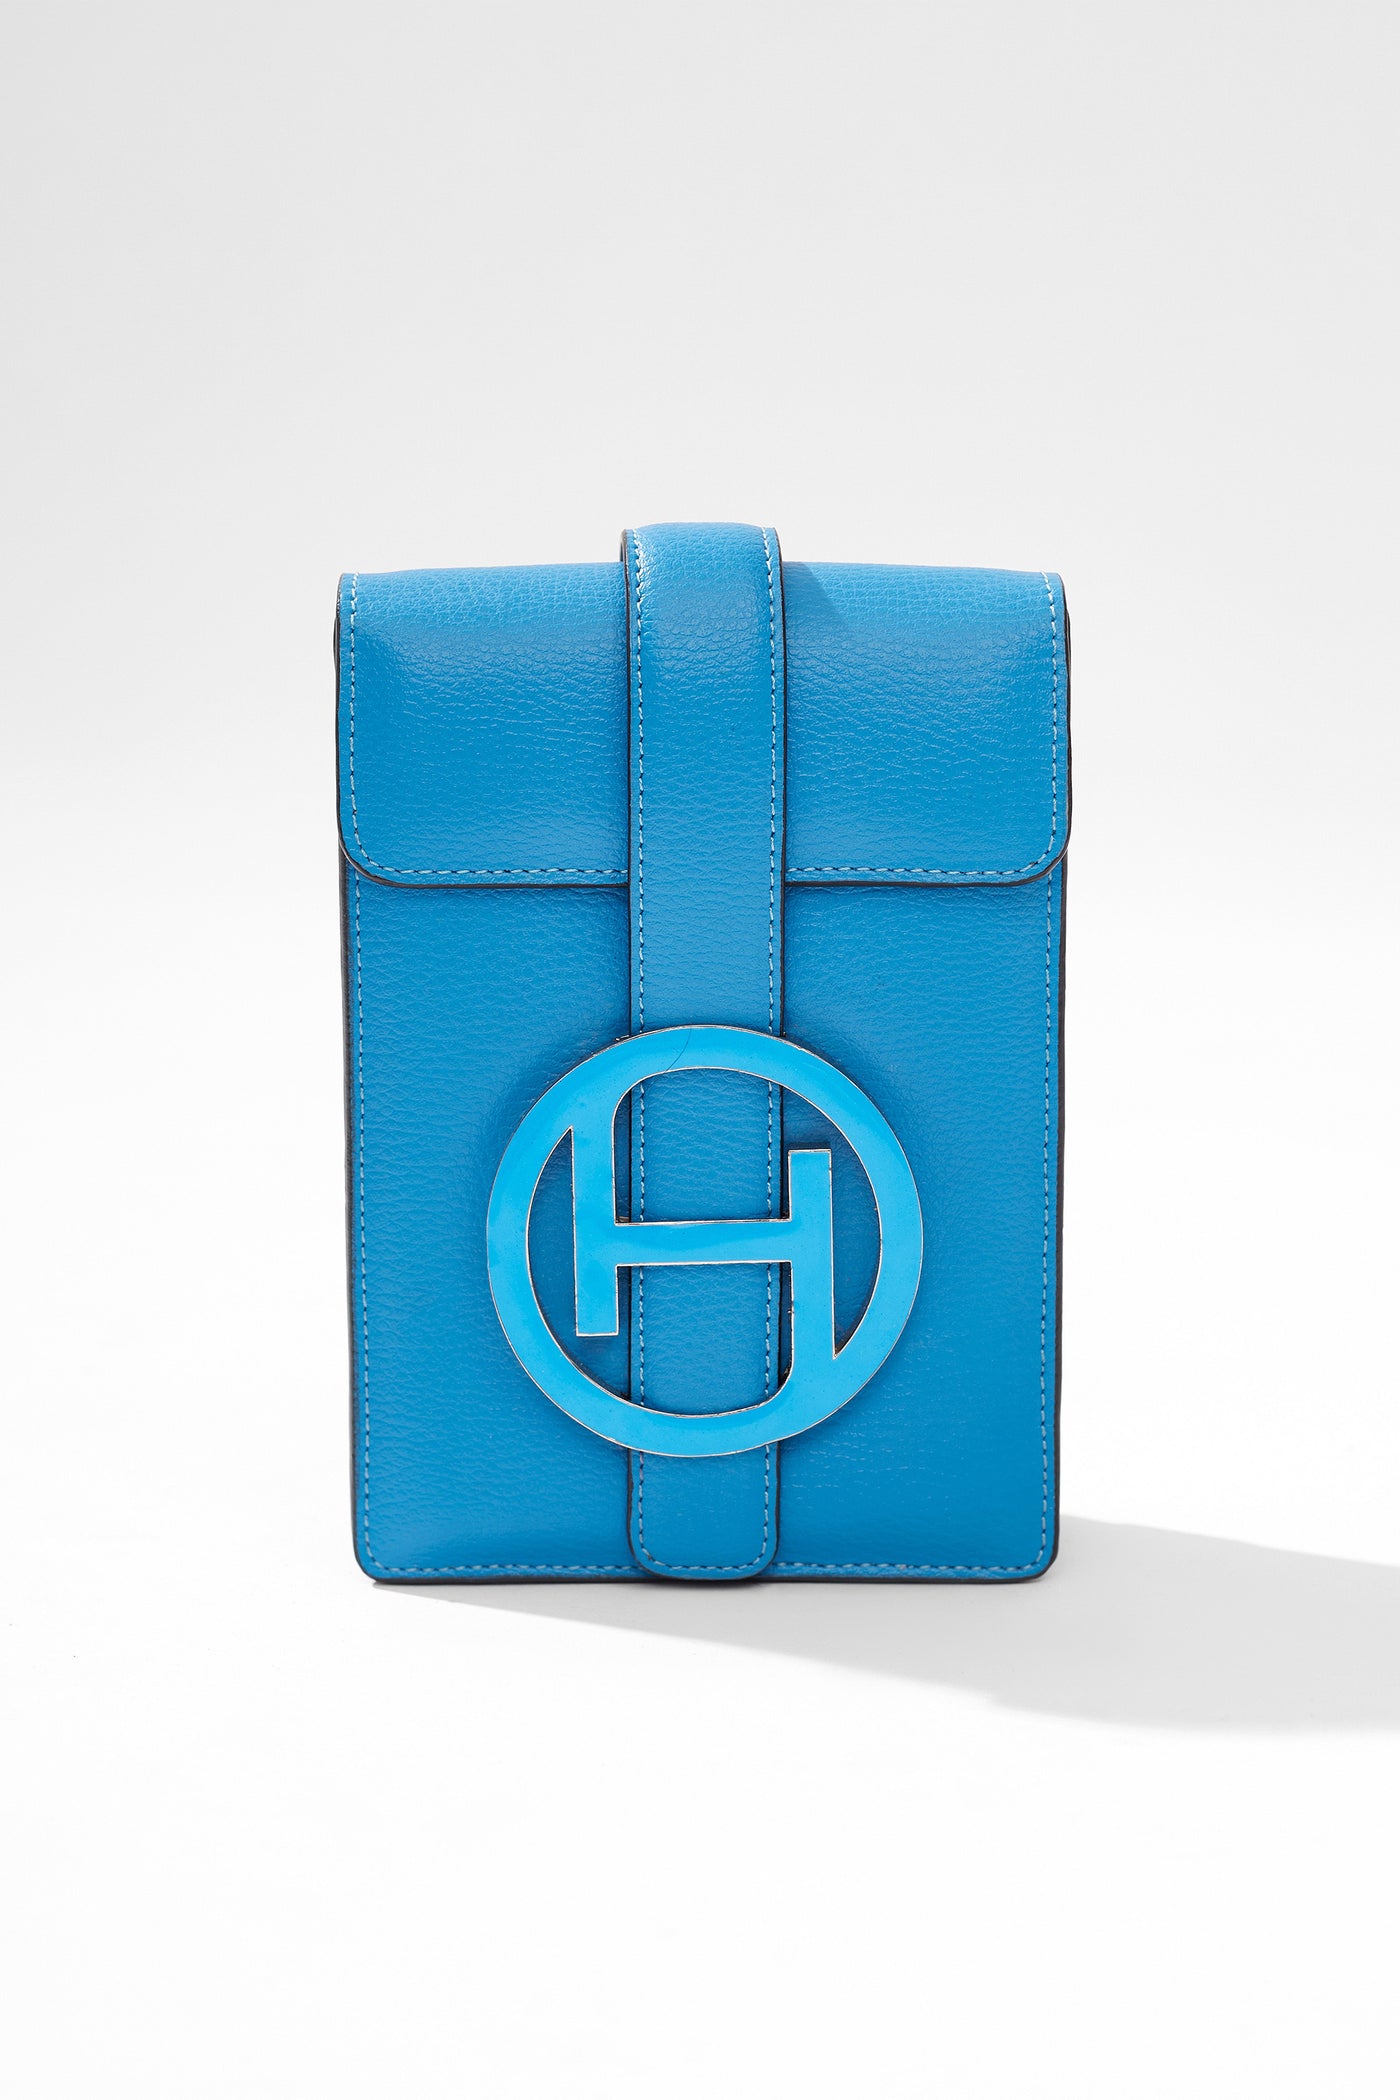 outhouse Dopamine Messenger Bag In Ocean Blue bags accessories online shopping melange singapore indian designer wear